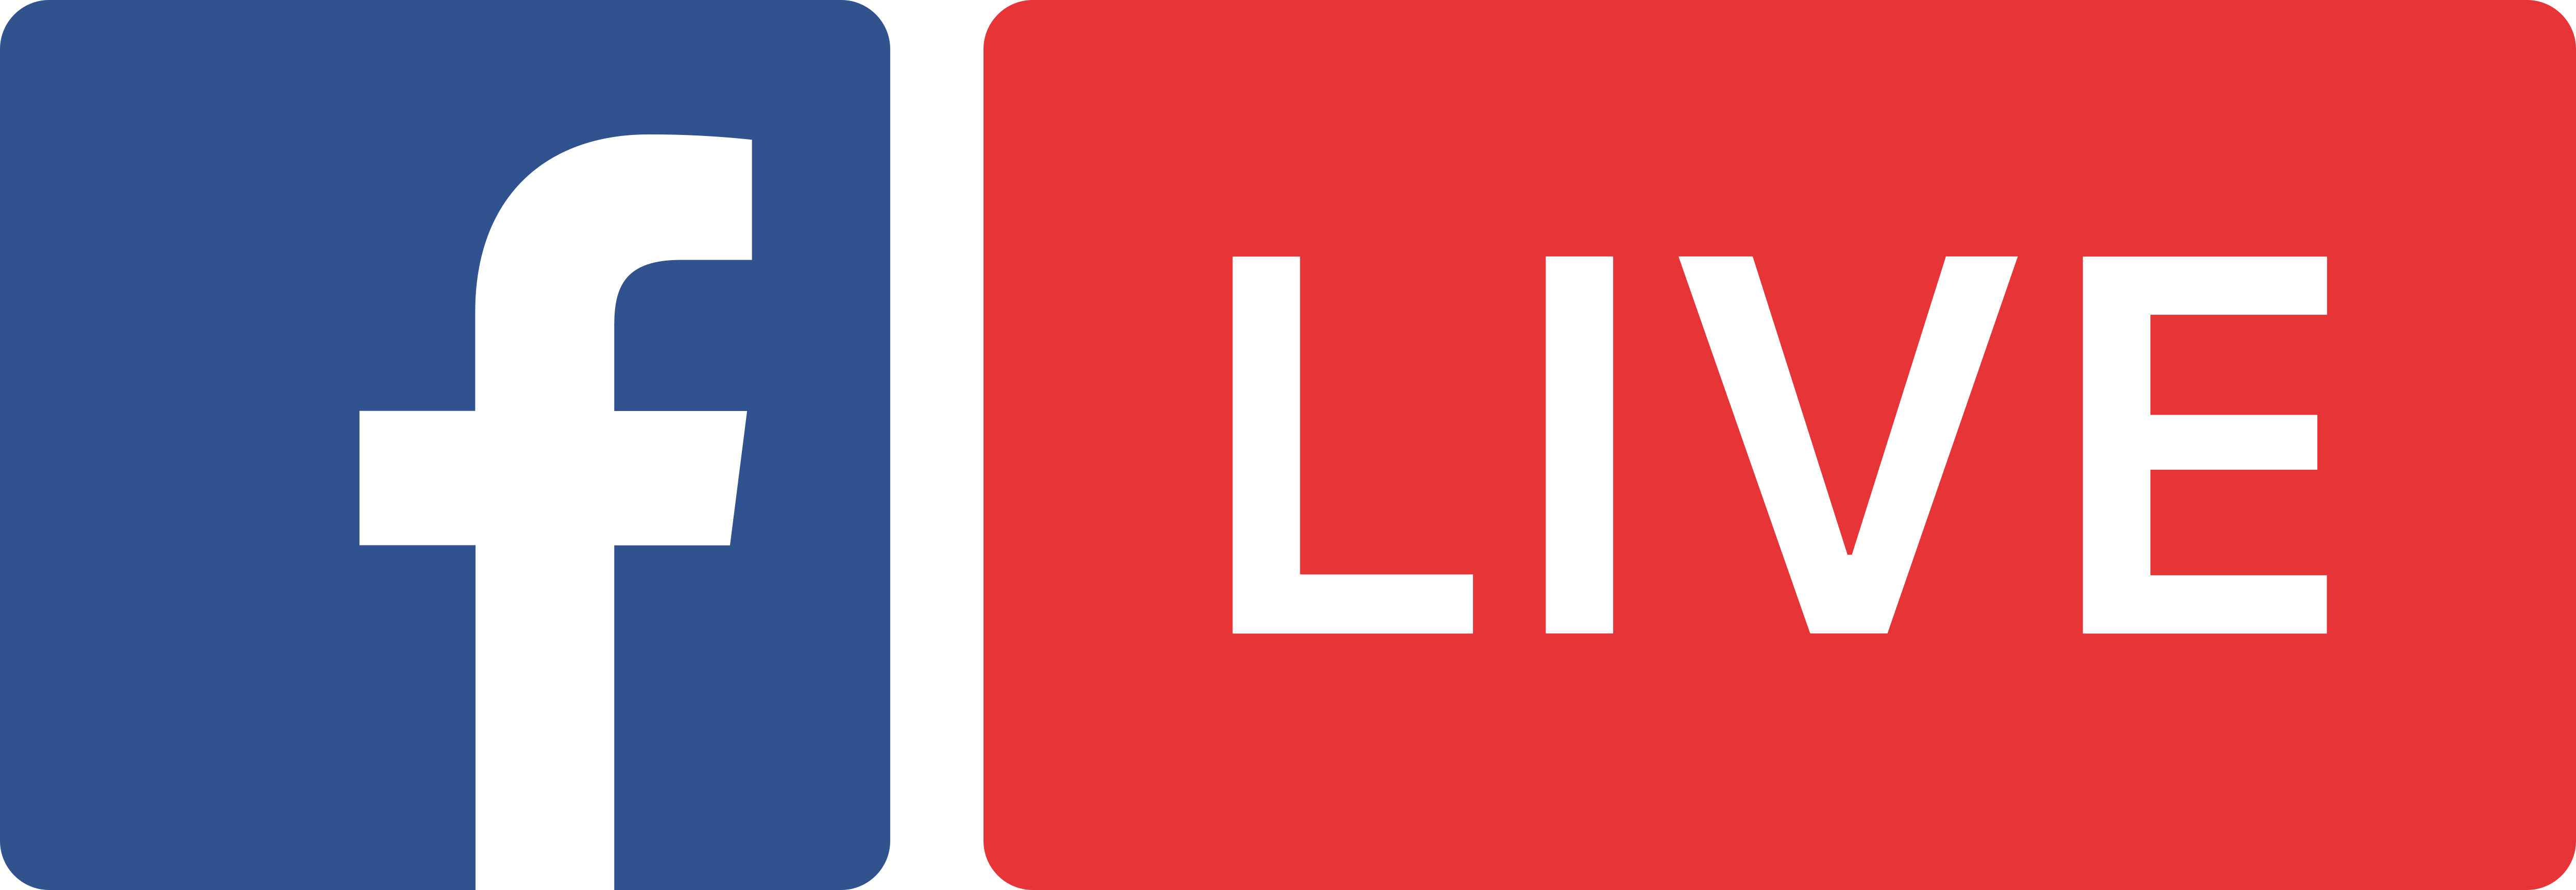 Facebook Live Logos Download